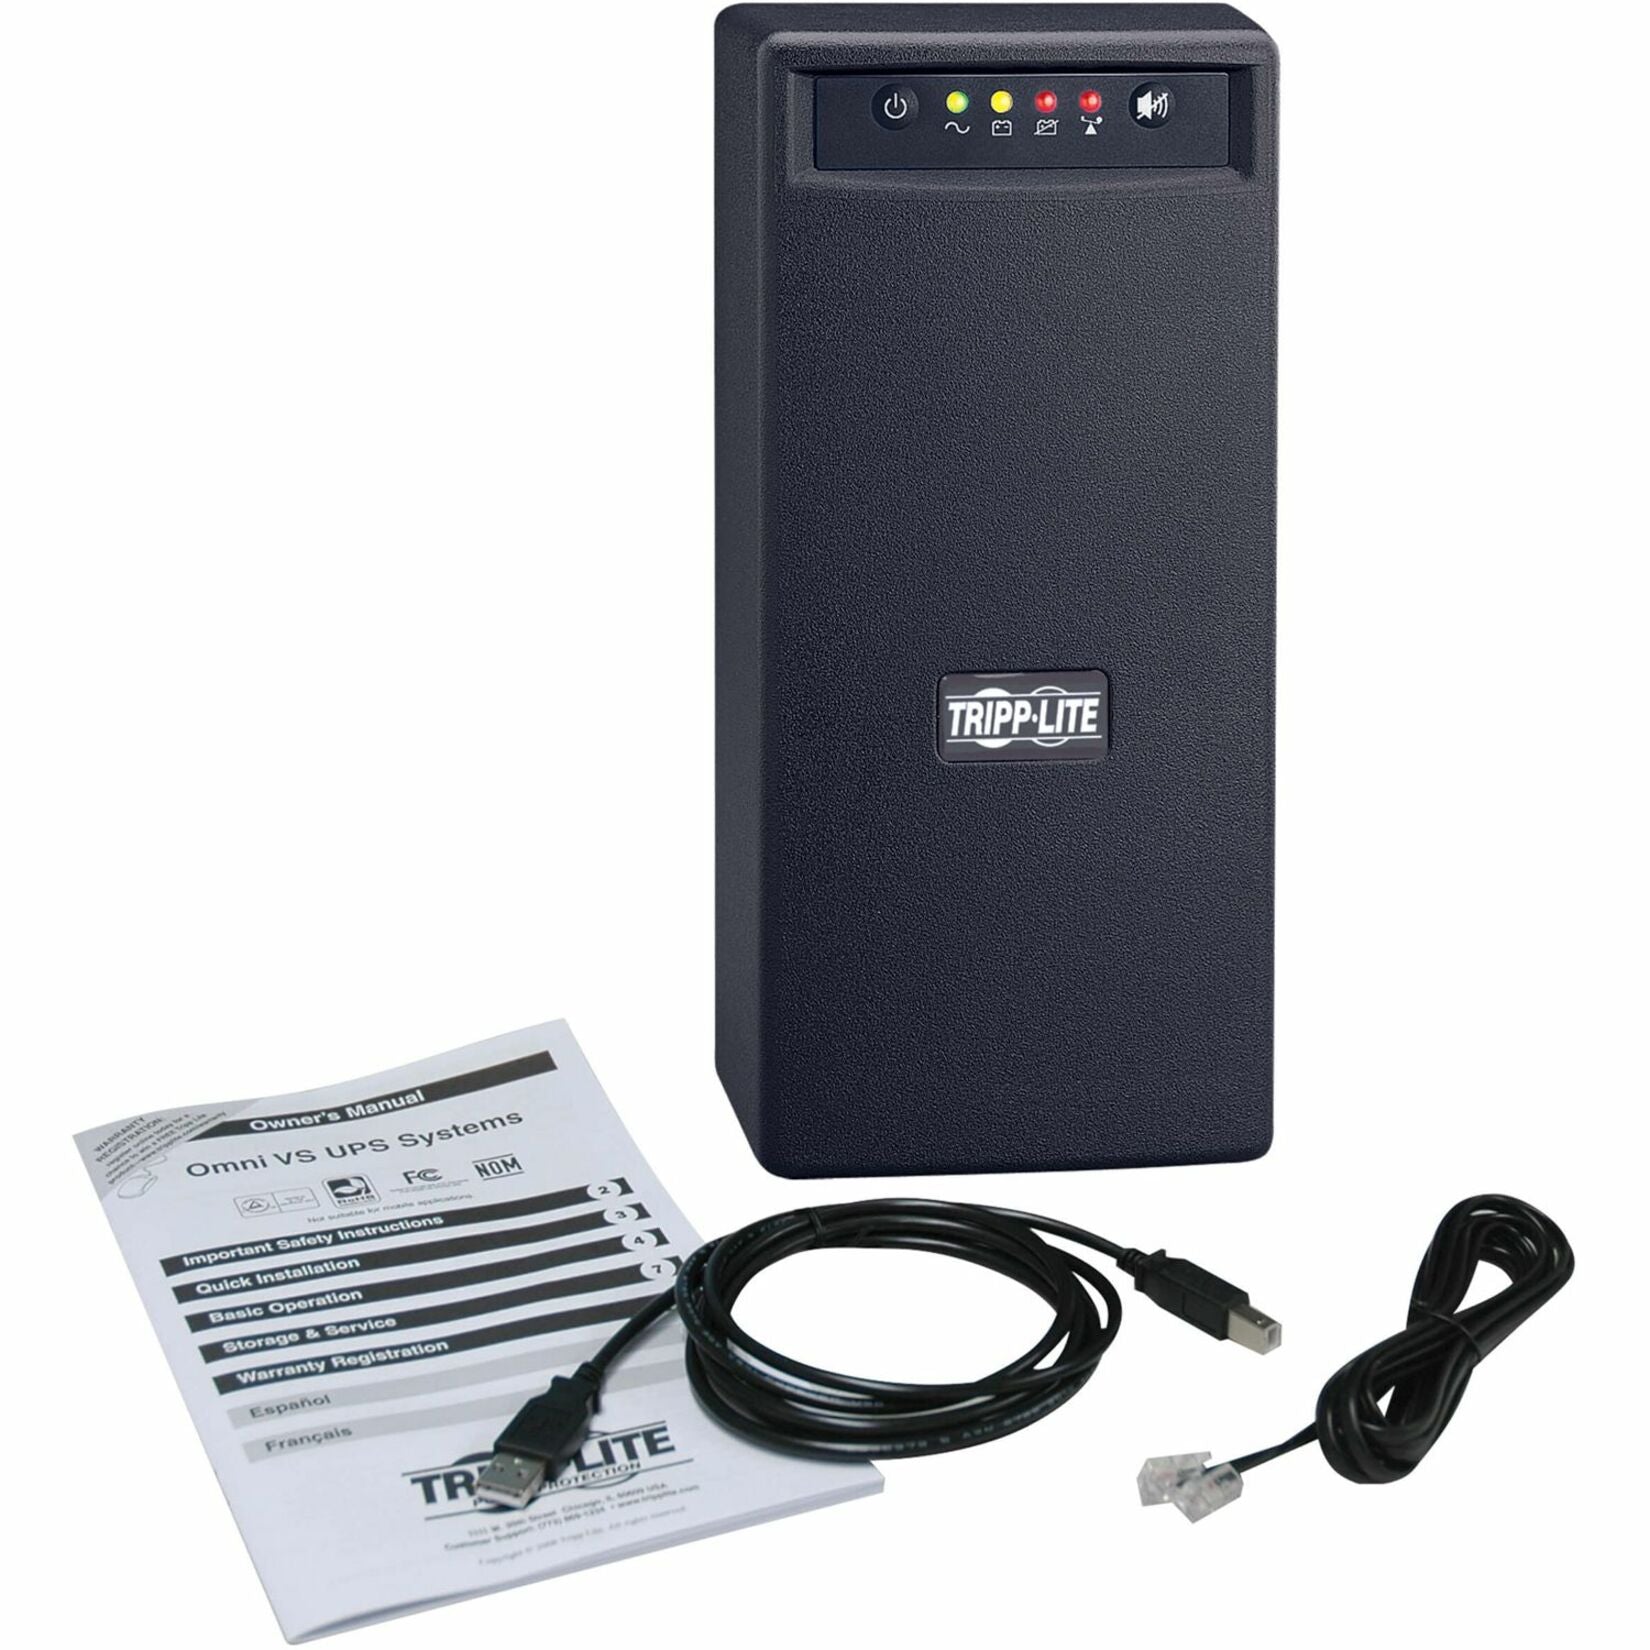 Tripp Lite OMNIVS1000 8-Outlet Line Interactive UPS System 1000VA 60Min Backup Time